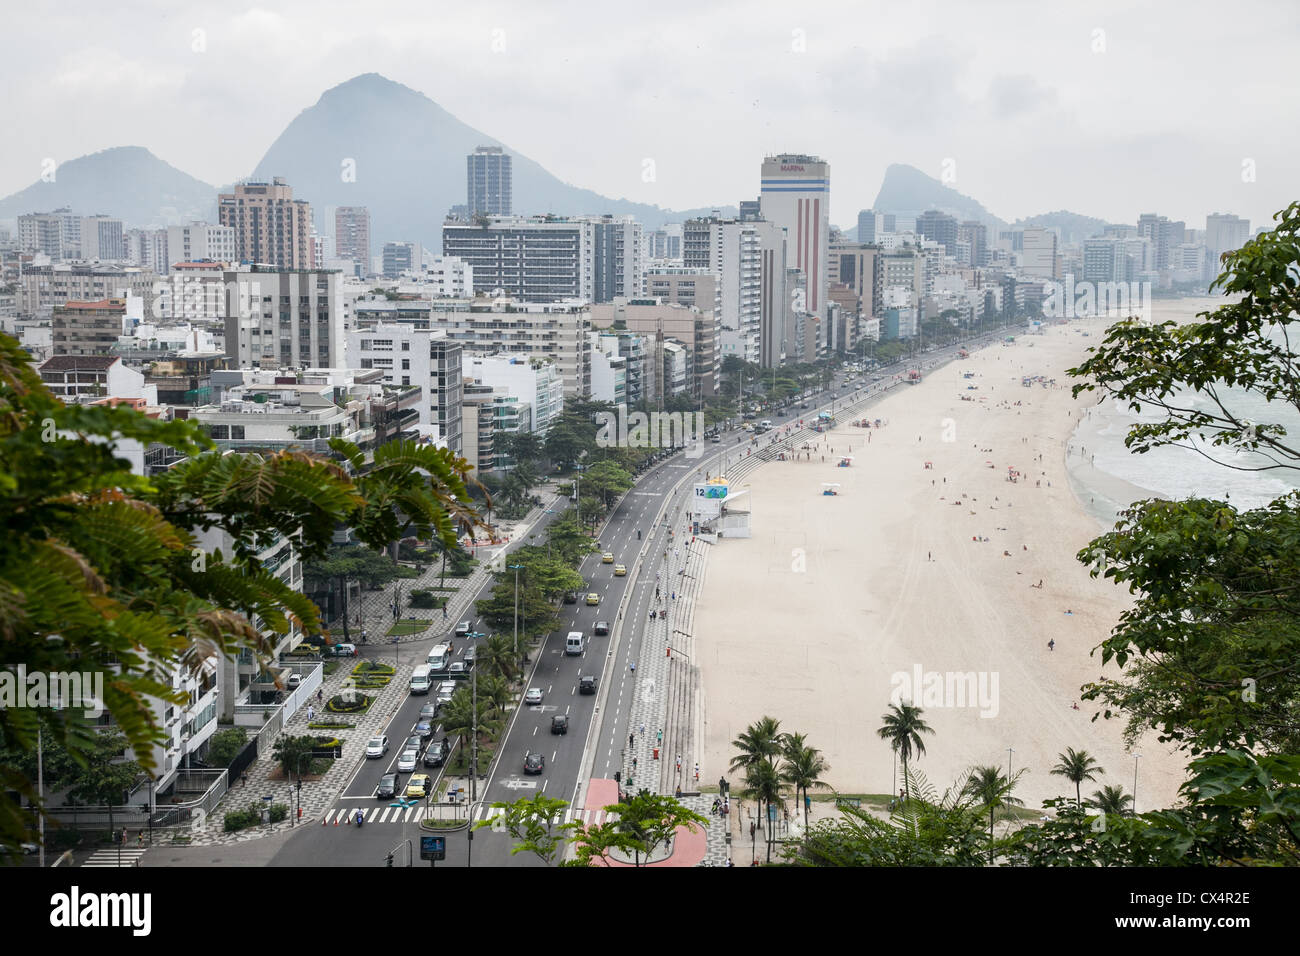 Cloudy skies over Rio de Janeiro, Brazil in the Leblon and Ipanema beach neighborhoods of the city Stock Photo